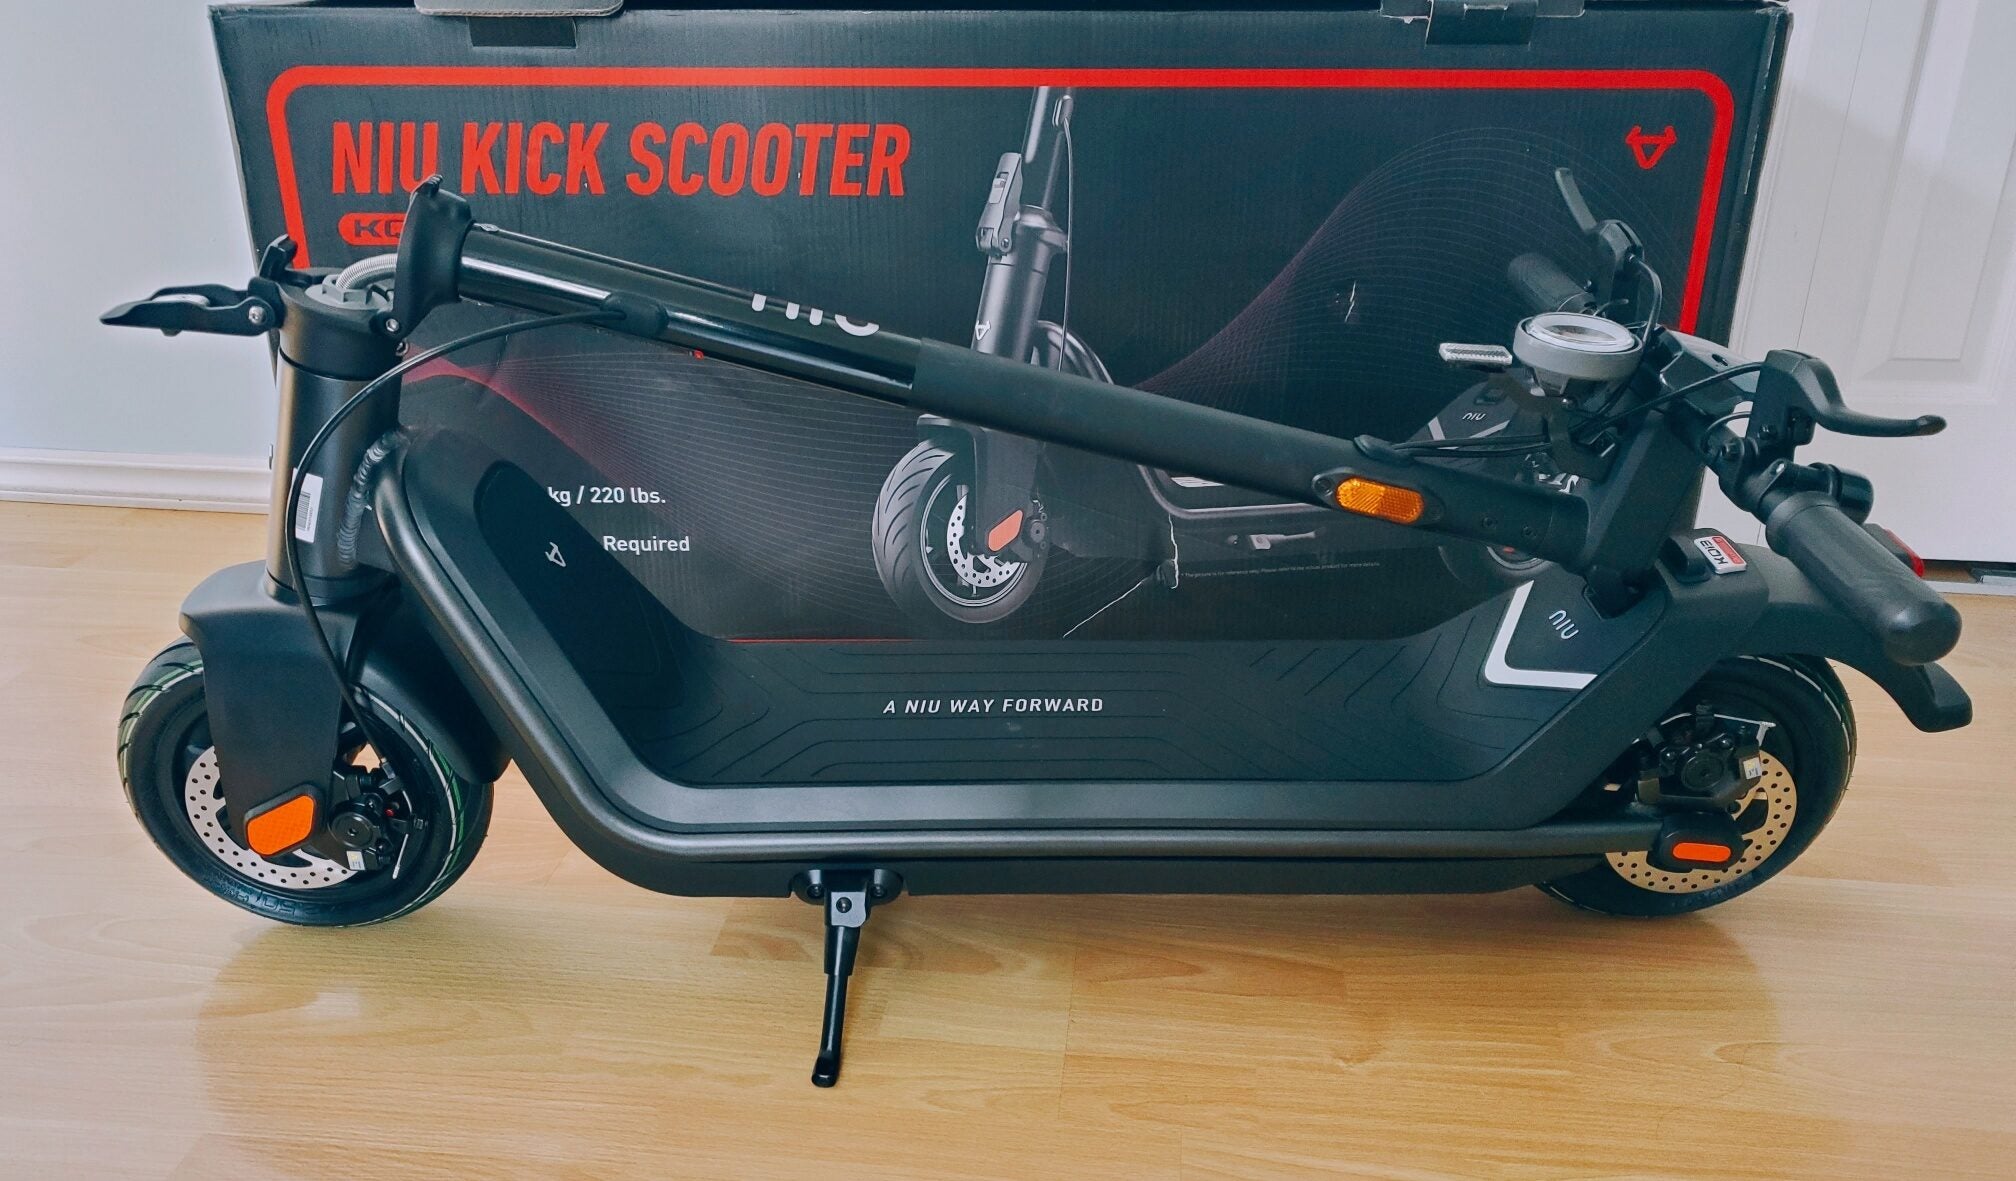 s BEST NEW Electric Scooter NIU KQ13 vs XIAOMI PRO 2 vs SEGWAY  NINEBOT MAX